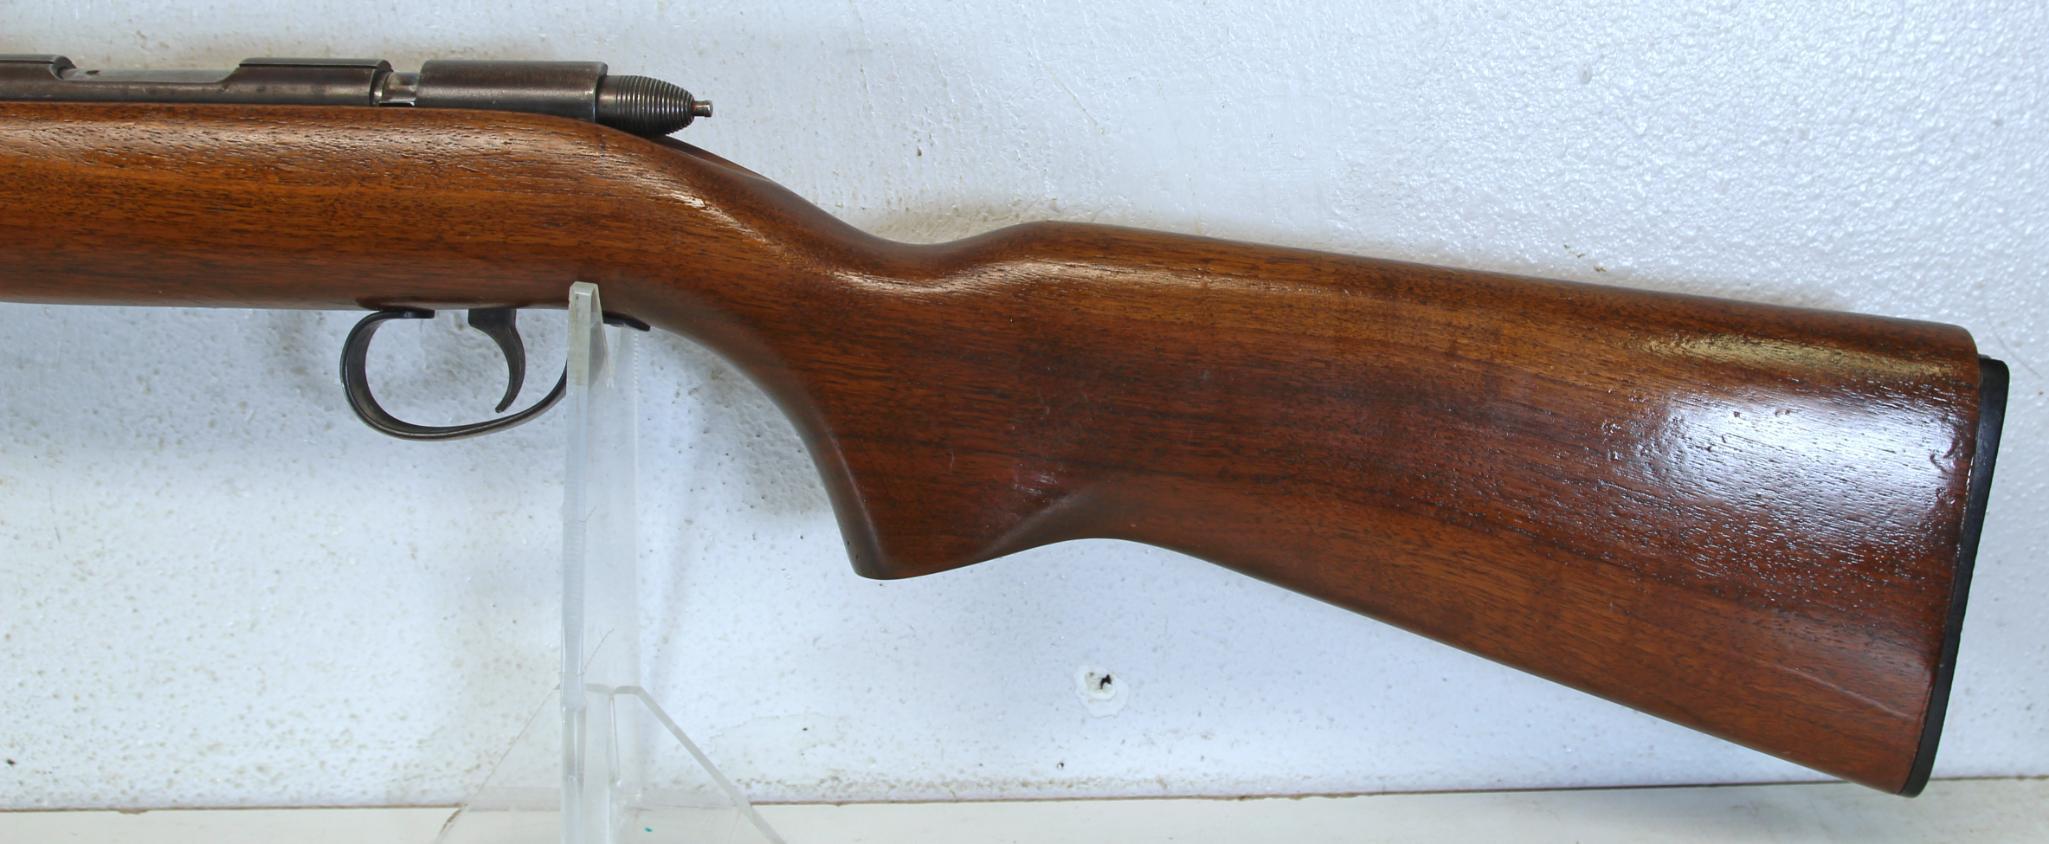 Remington Model 512 .22 S,L,LR Single Shot Rifle Small Piece of Butt Plate Broken Off at Top...